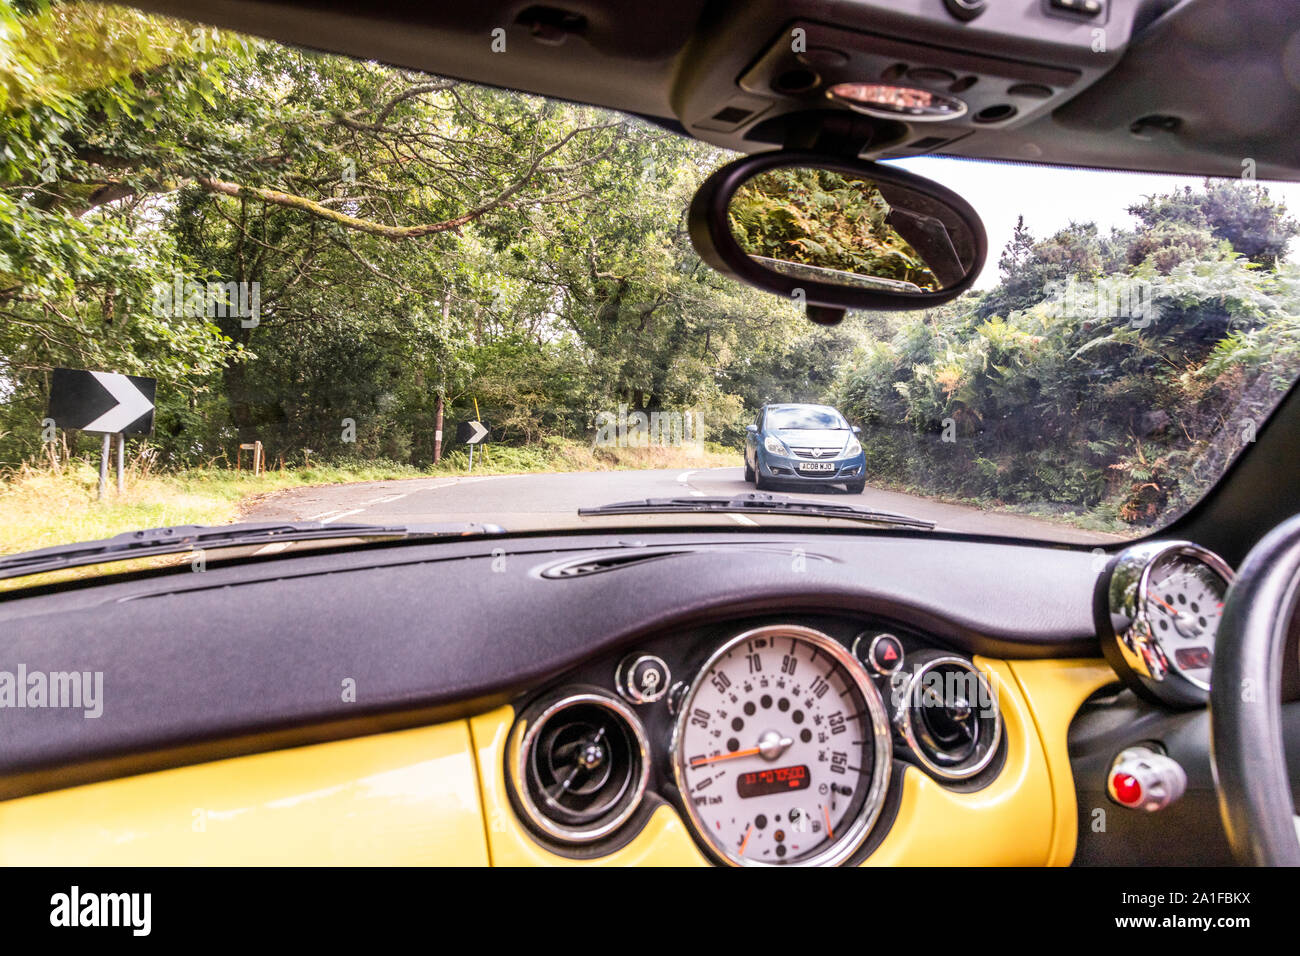 Passenger's view of a yellow convertible Mini Cooper going up Porlock Hill, Somerset UK Stock Photo